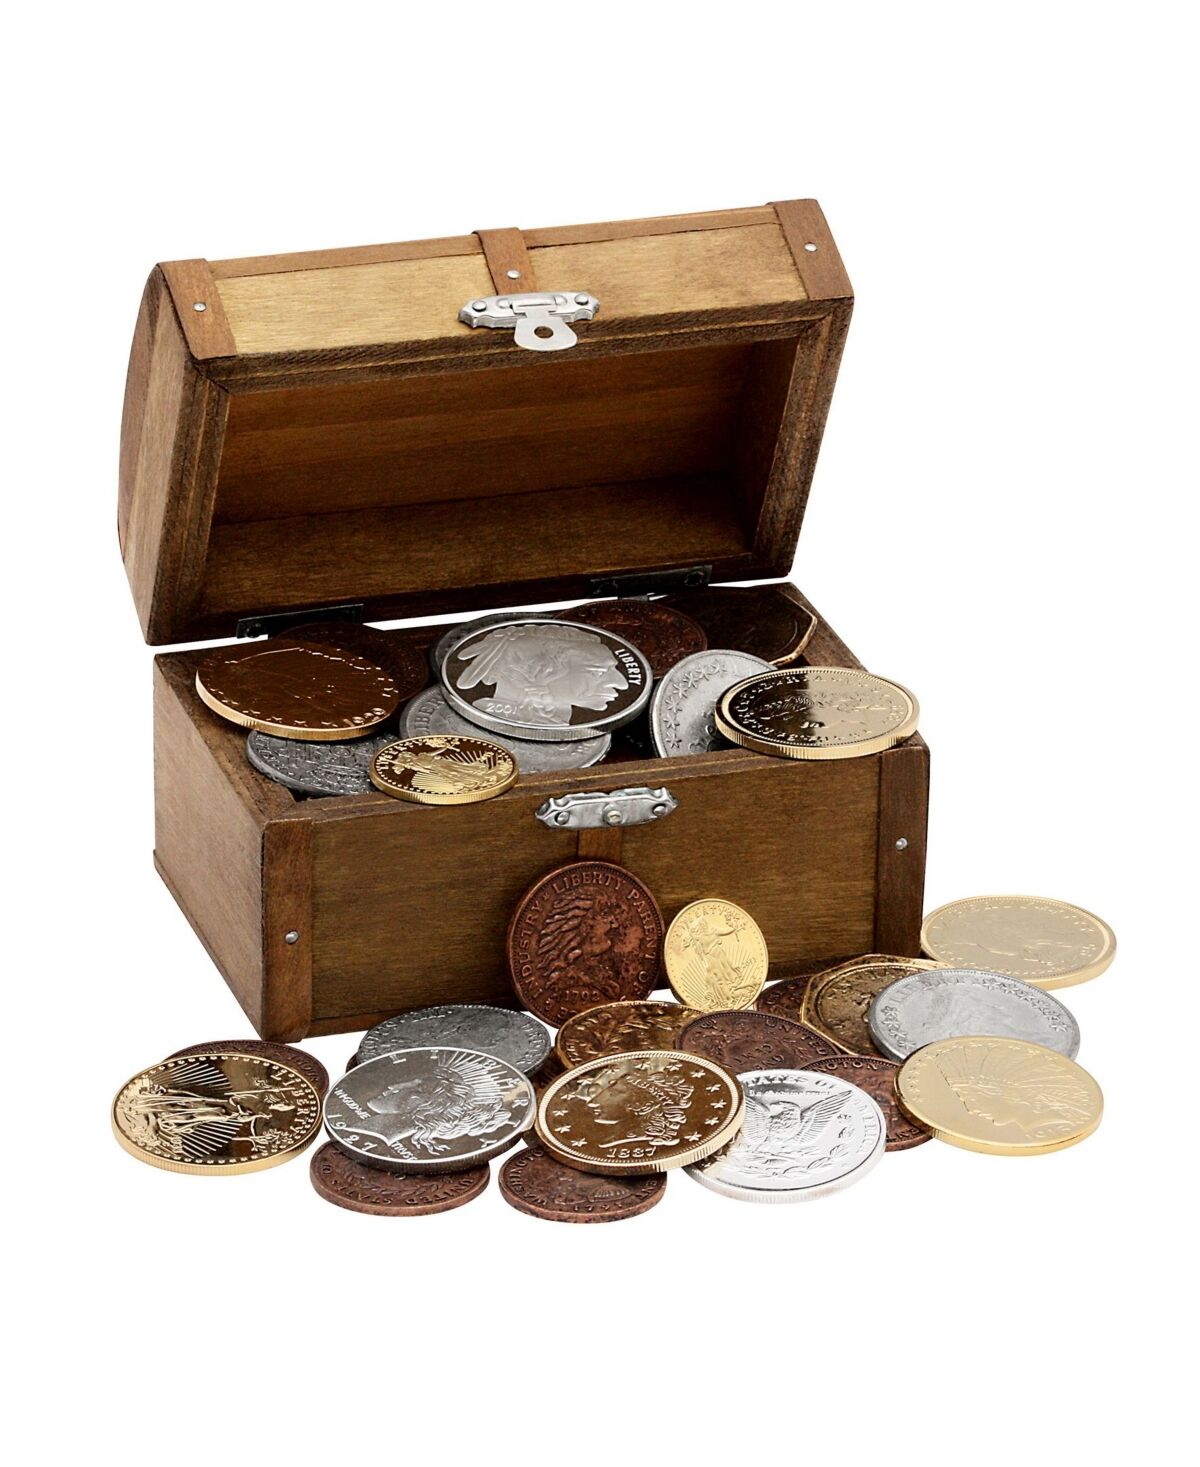 American Coin Treasures National Treasure 20 United States Replica Coins - Multi